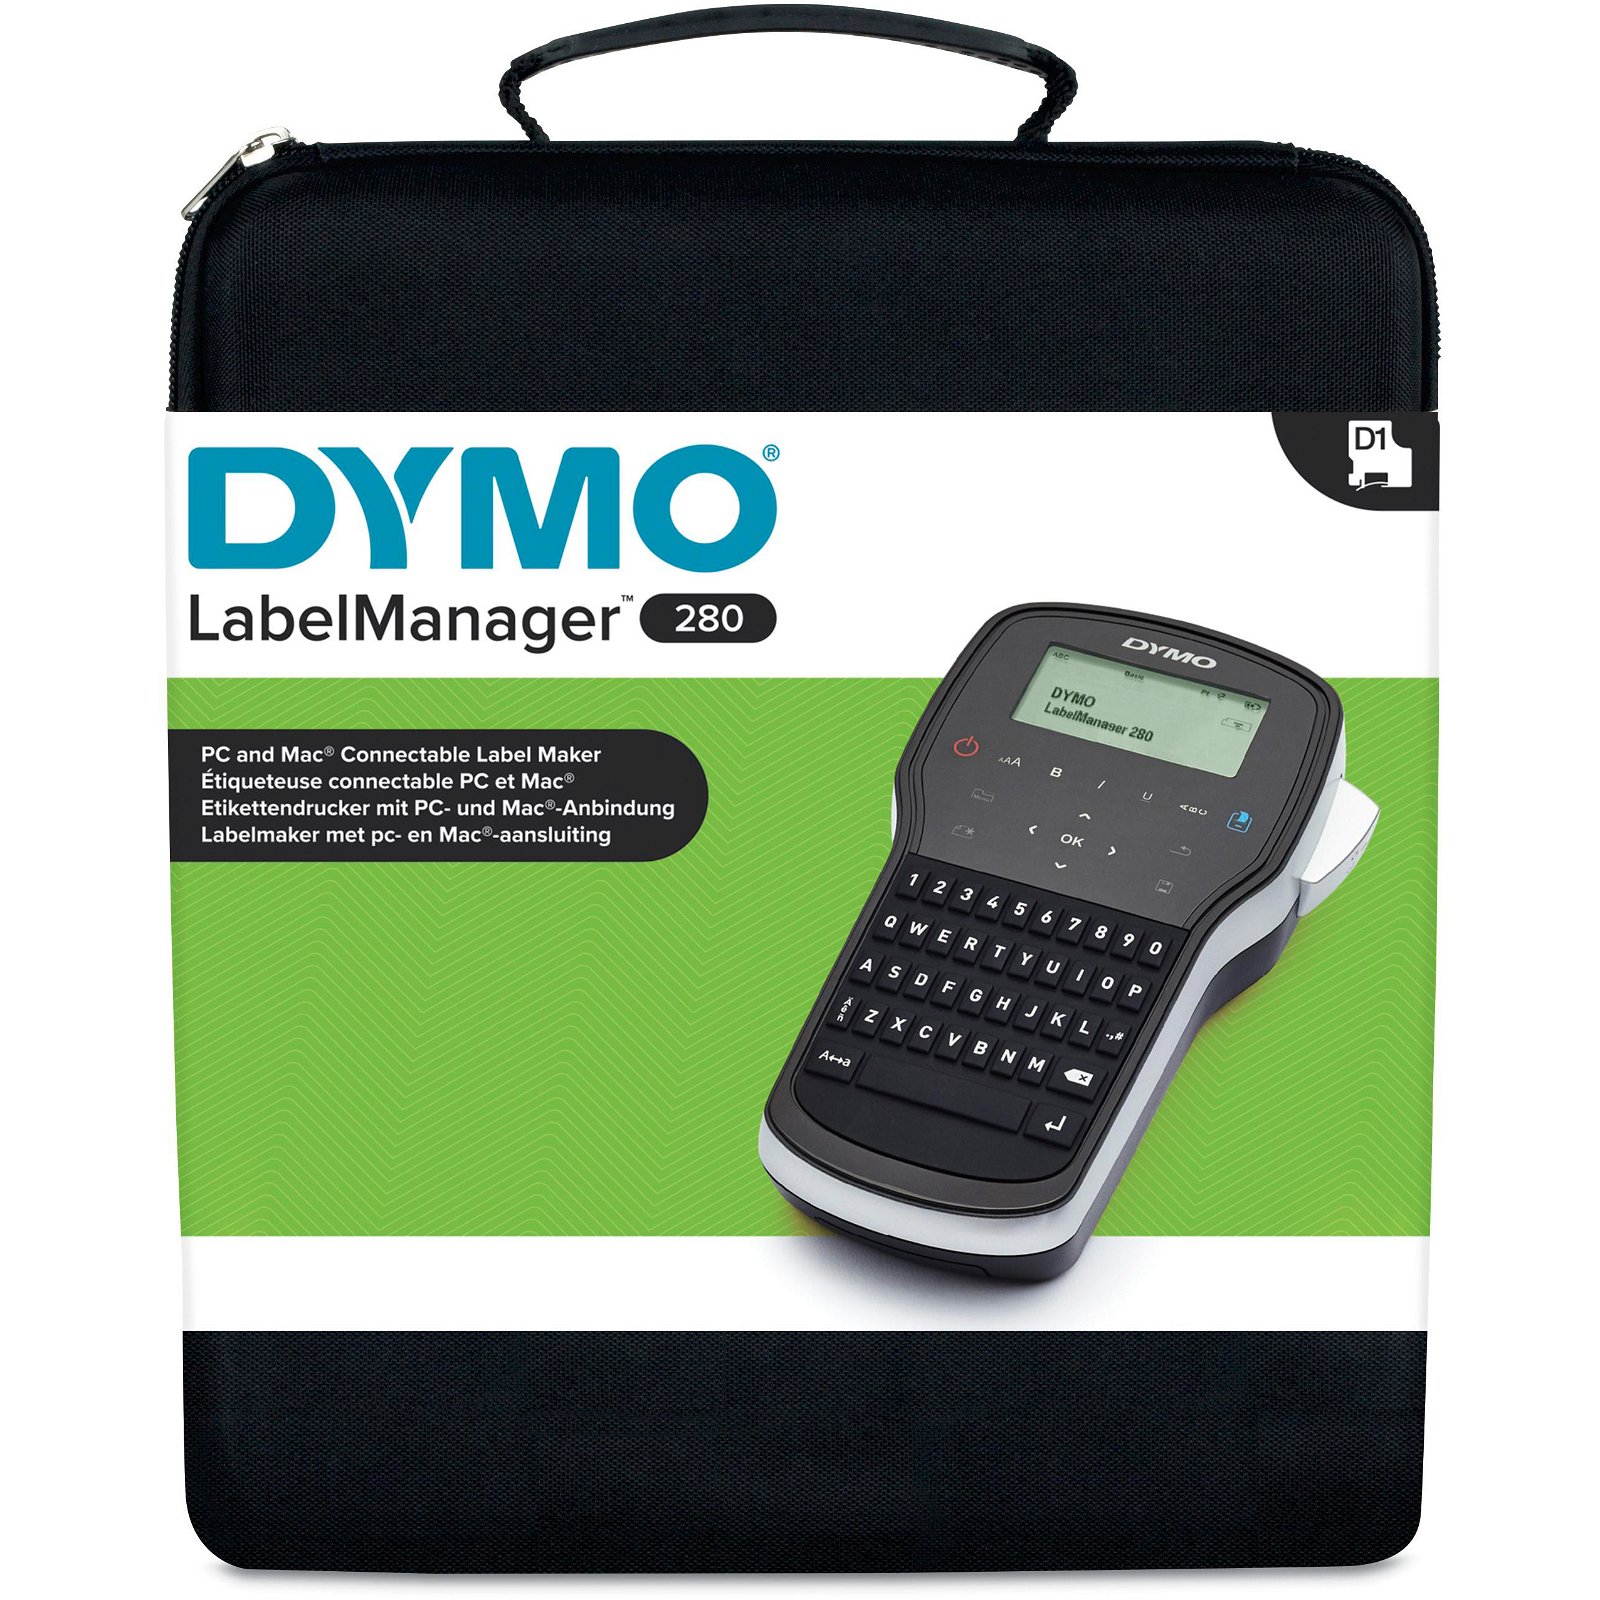 Dymo LabelManager 280 labelprinter kit case